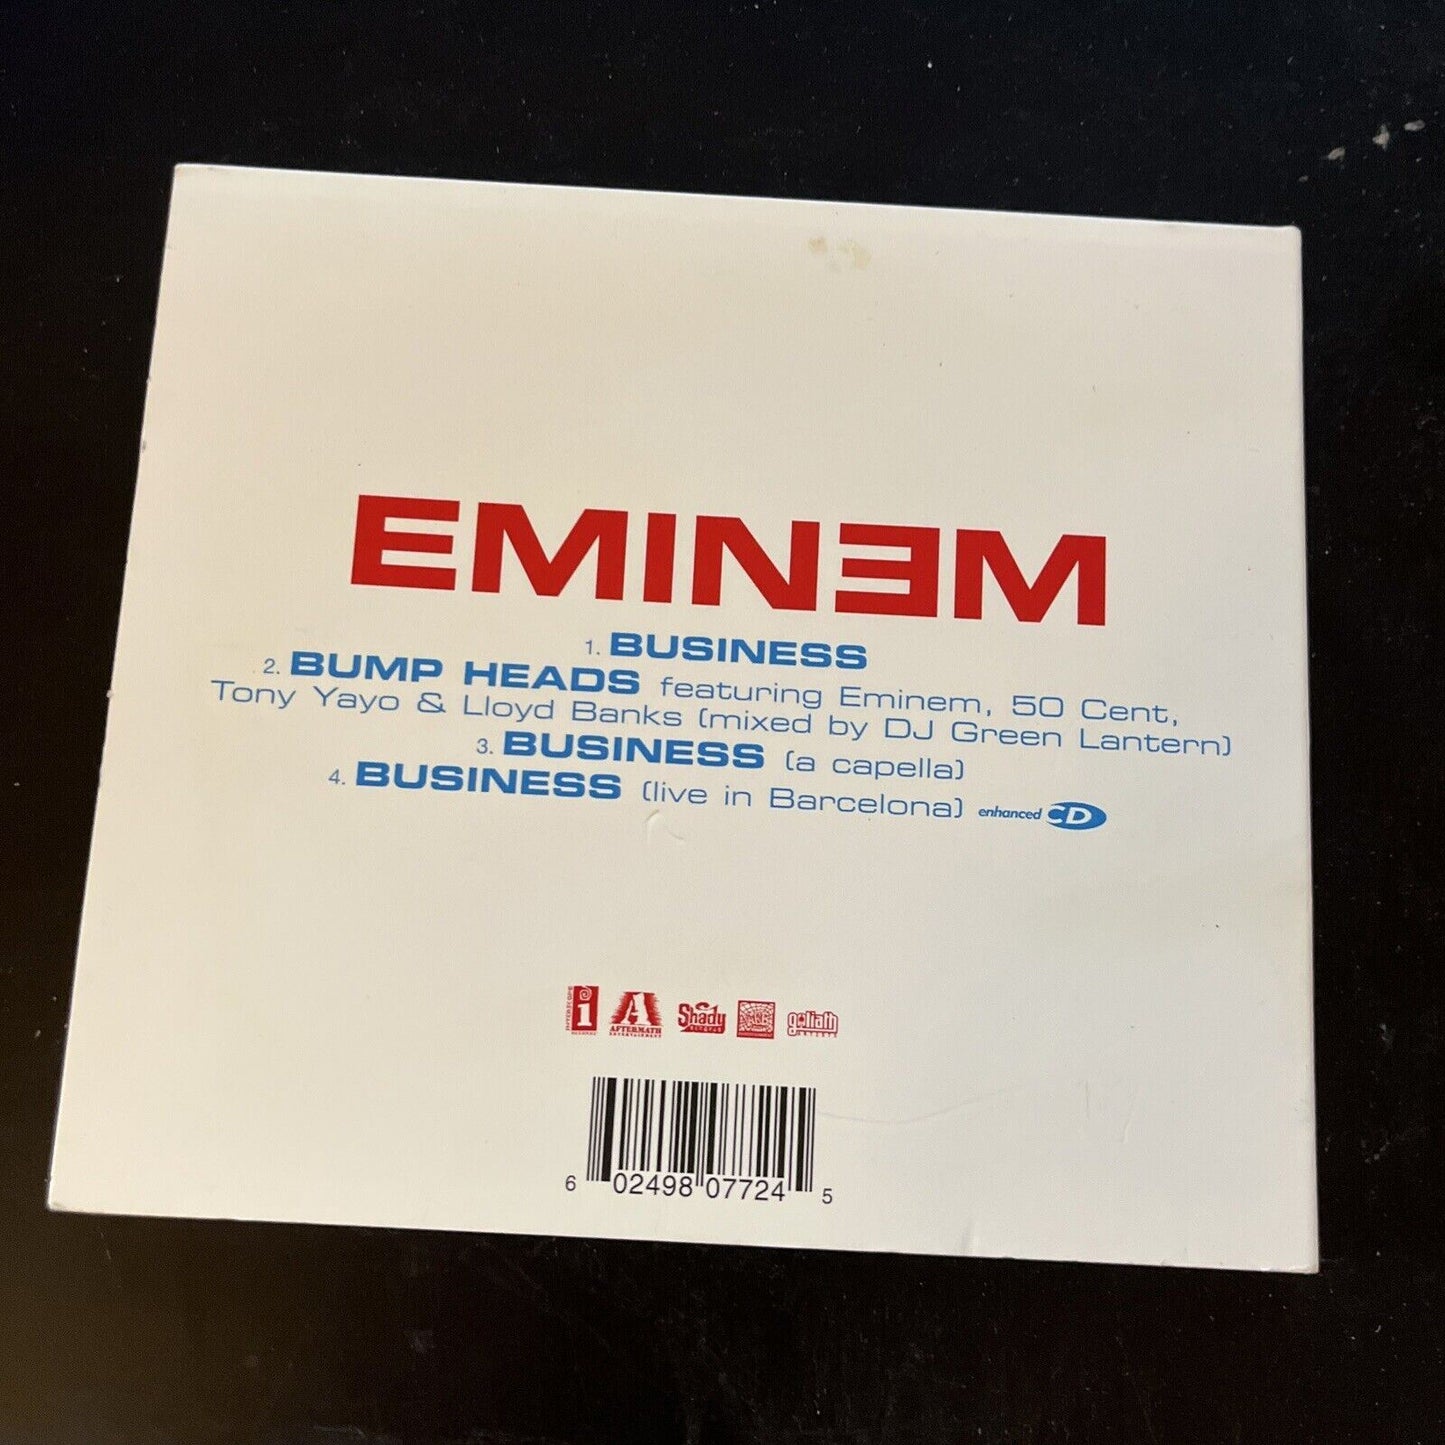 Eminem - Business/Bump Heads (CD, 2003)